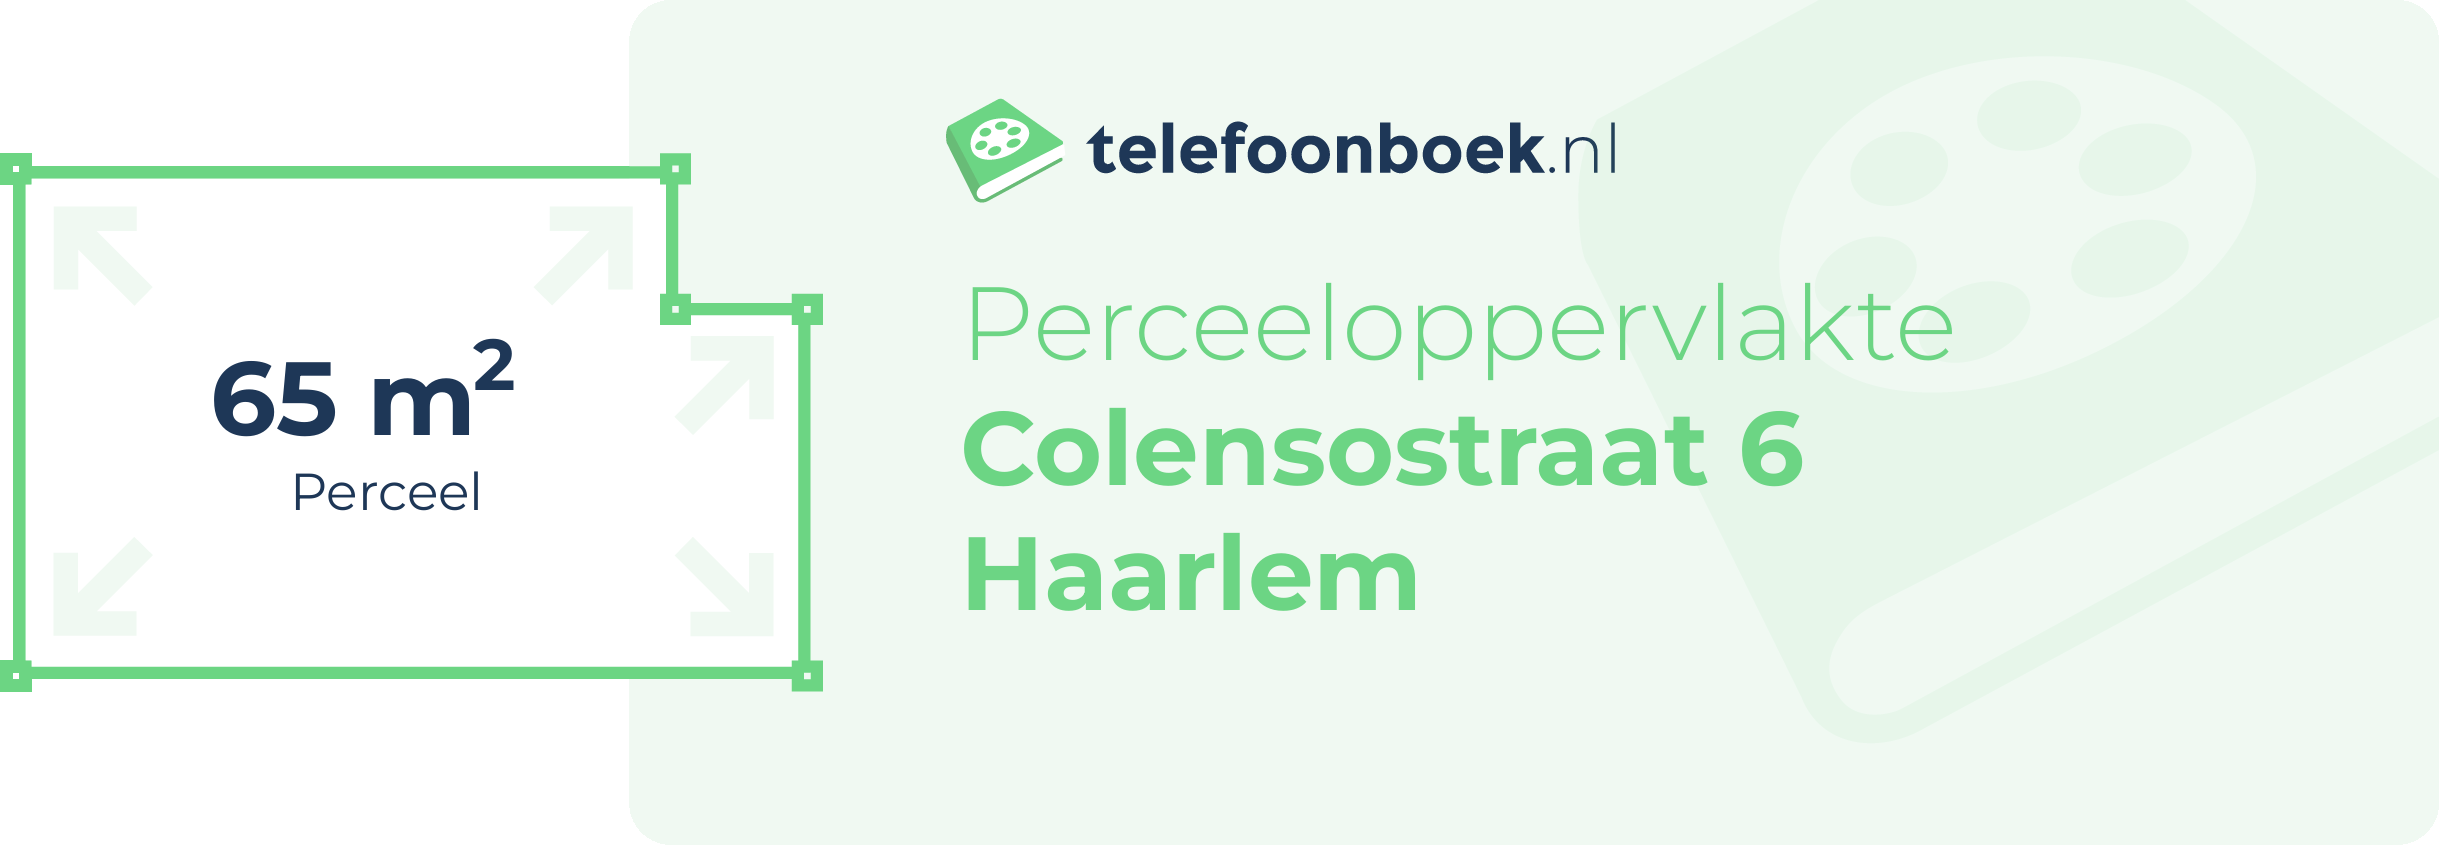 Perceeloppervlakte Colensostraat 6 Haarlem